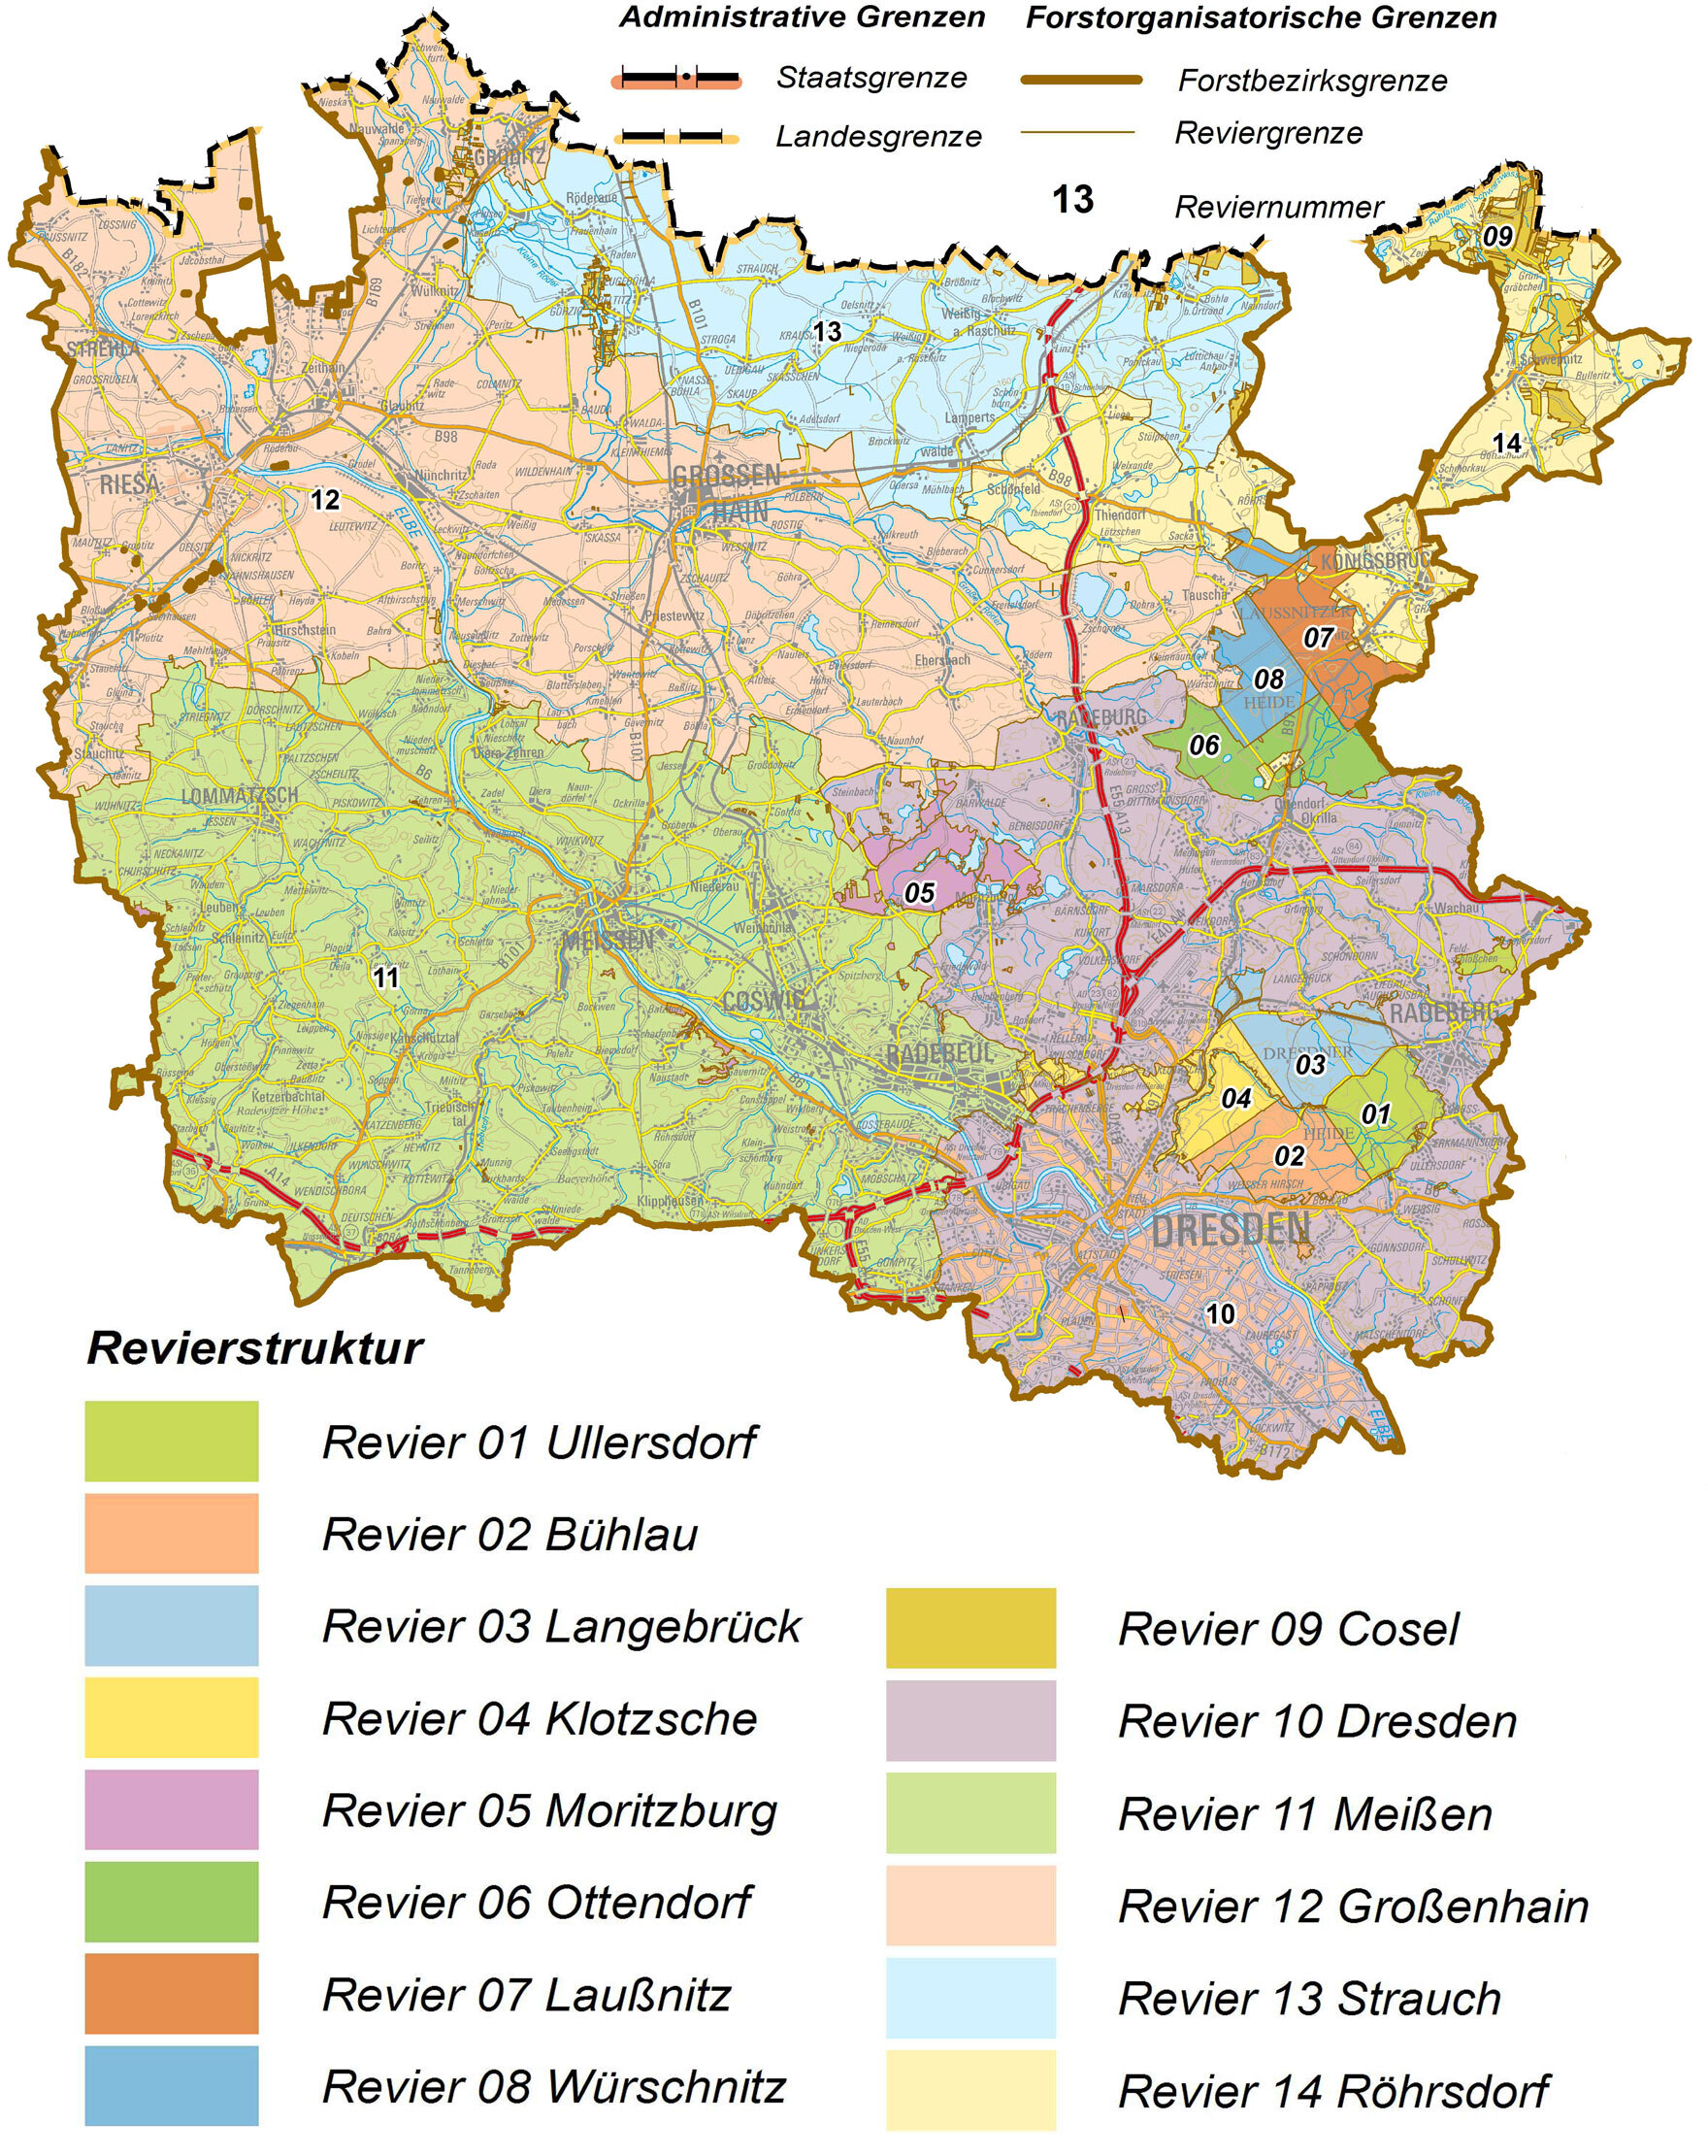 Übersichtskarte des Forstbezirkes Dresden